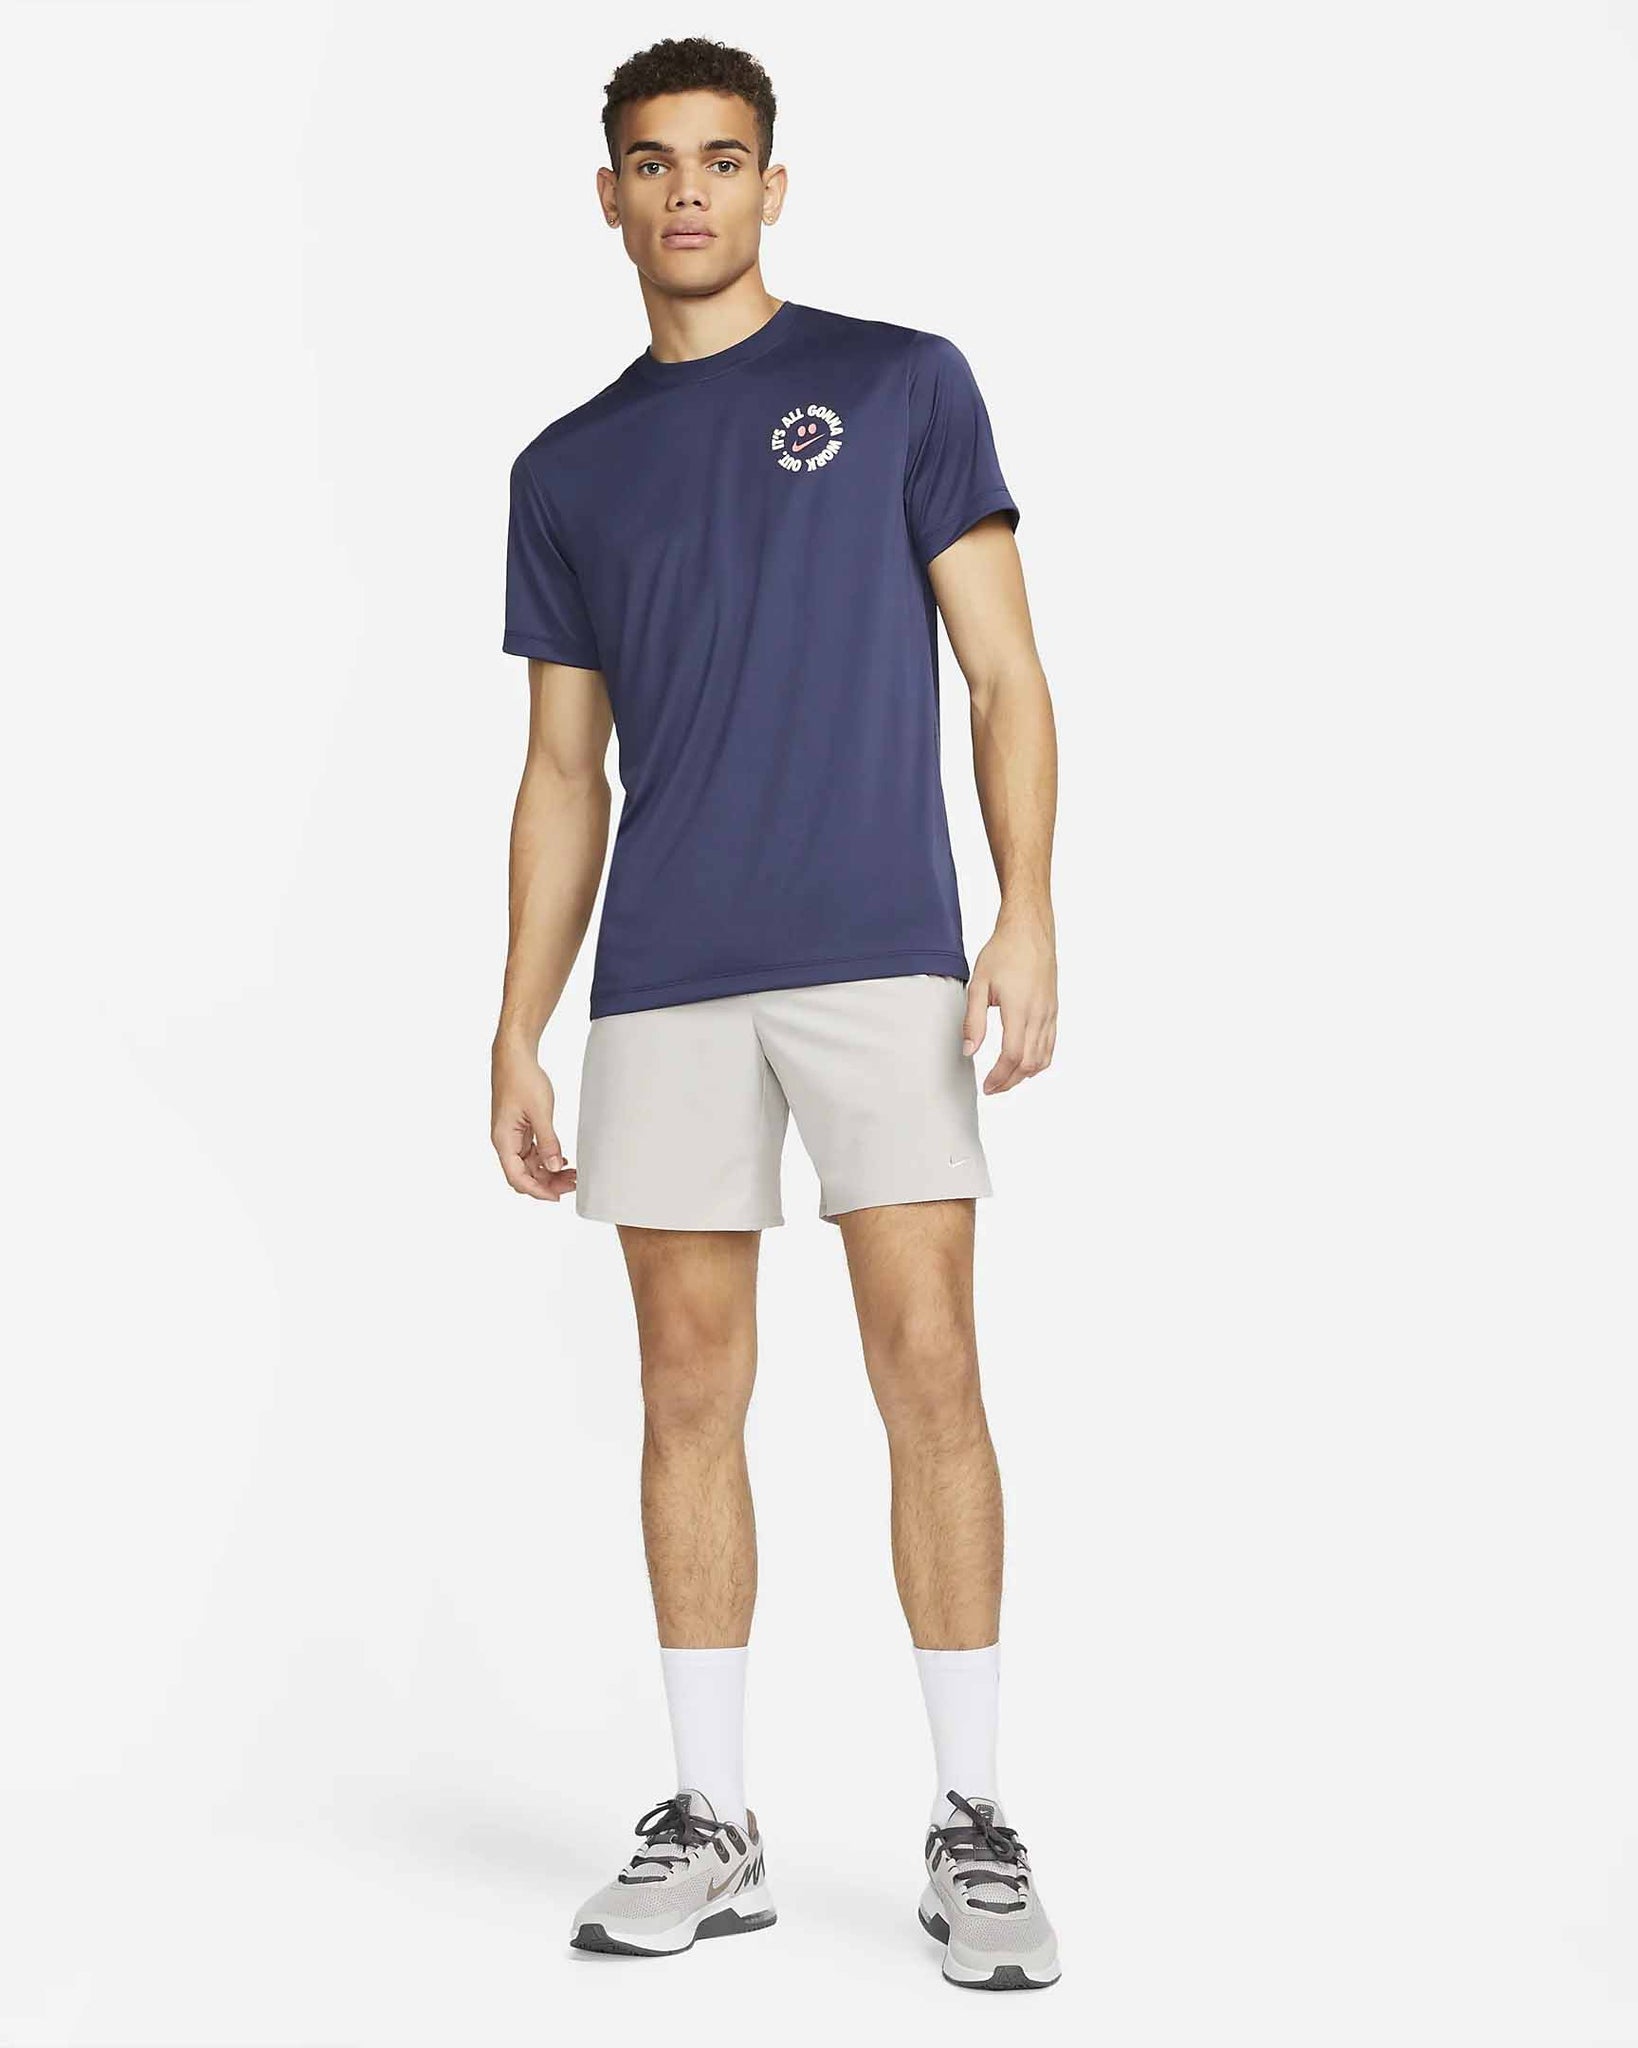 Nike It's All Skirt Workout DRI-Fit T-Shirt